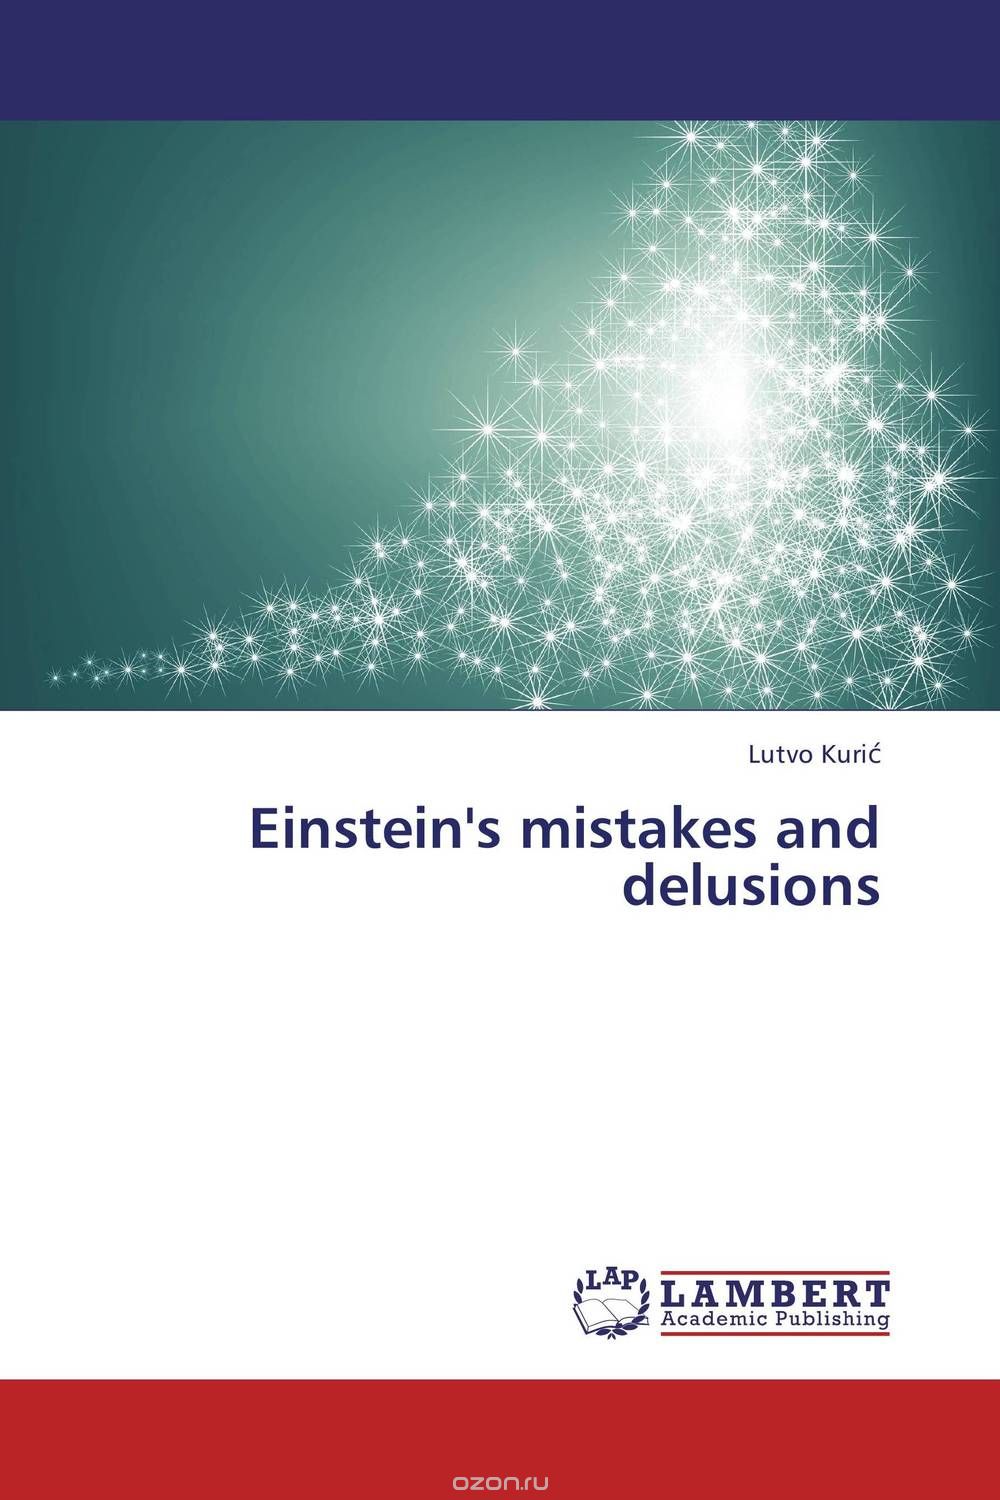 Скачать книгу "Einstein's mistakes and delusions"